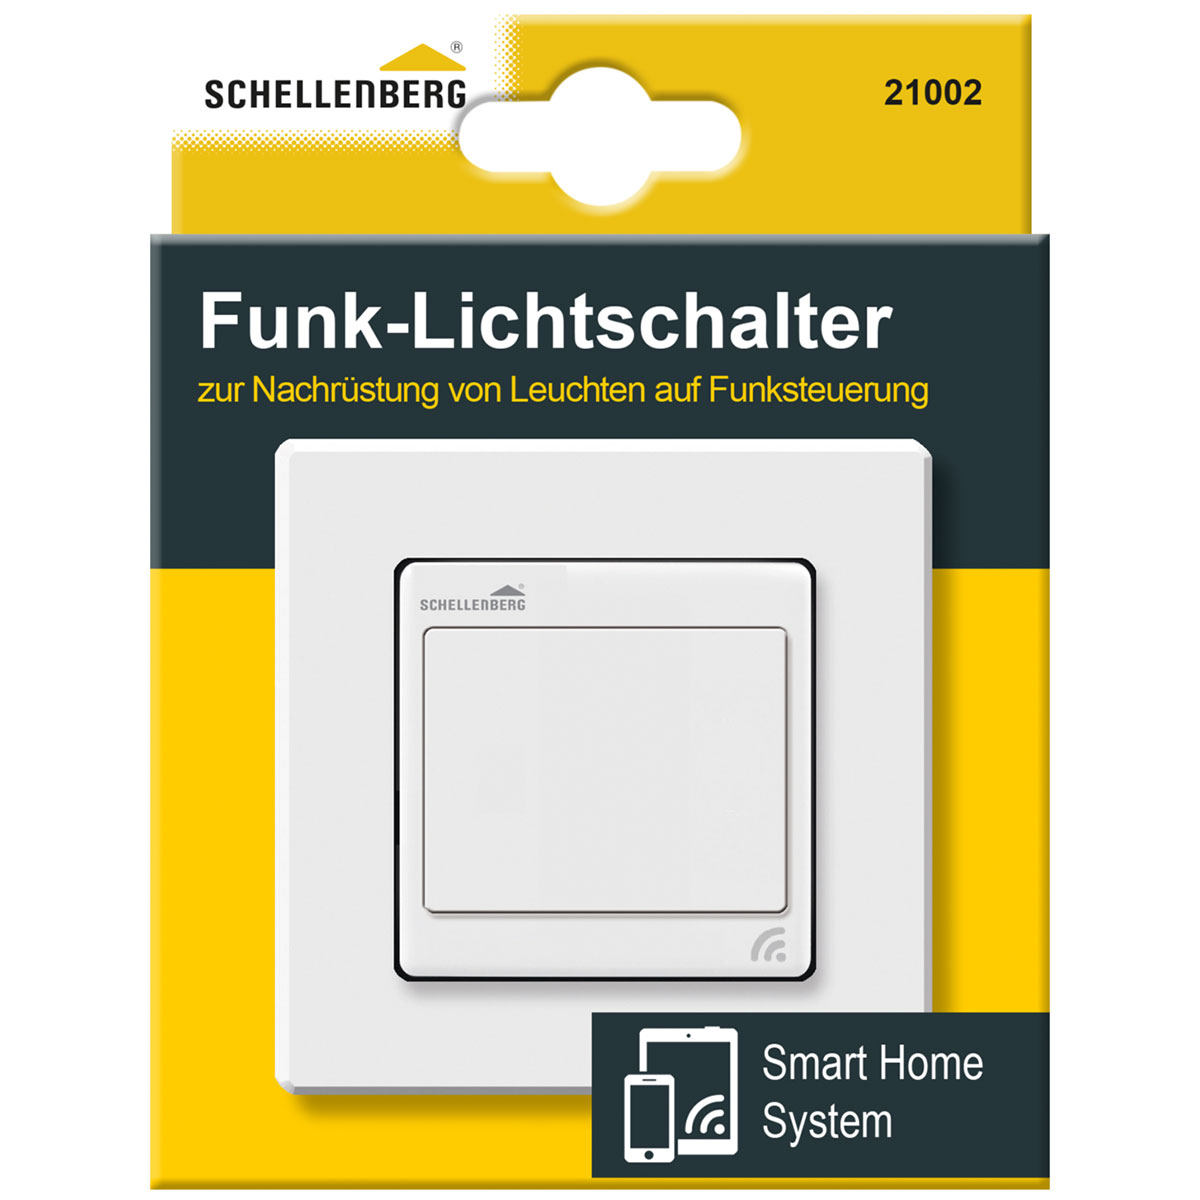 21002-funk-lichtschalter-verpackung